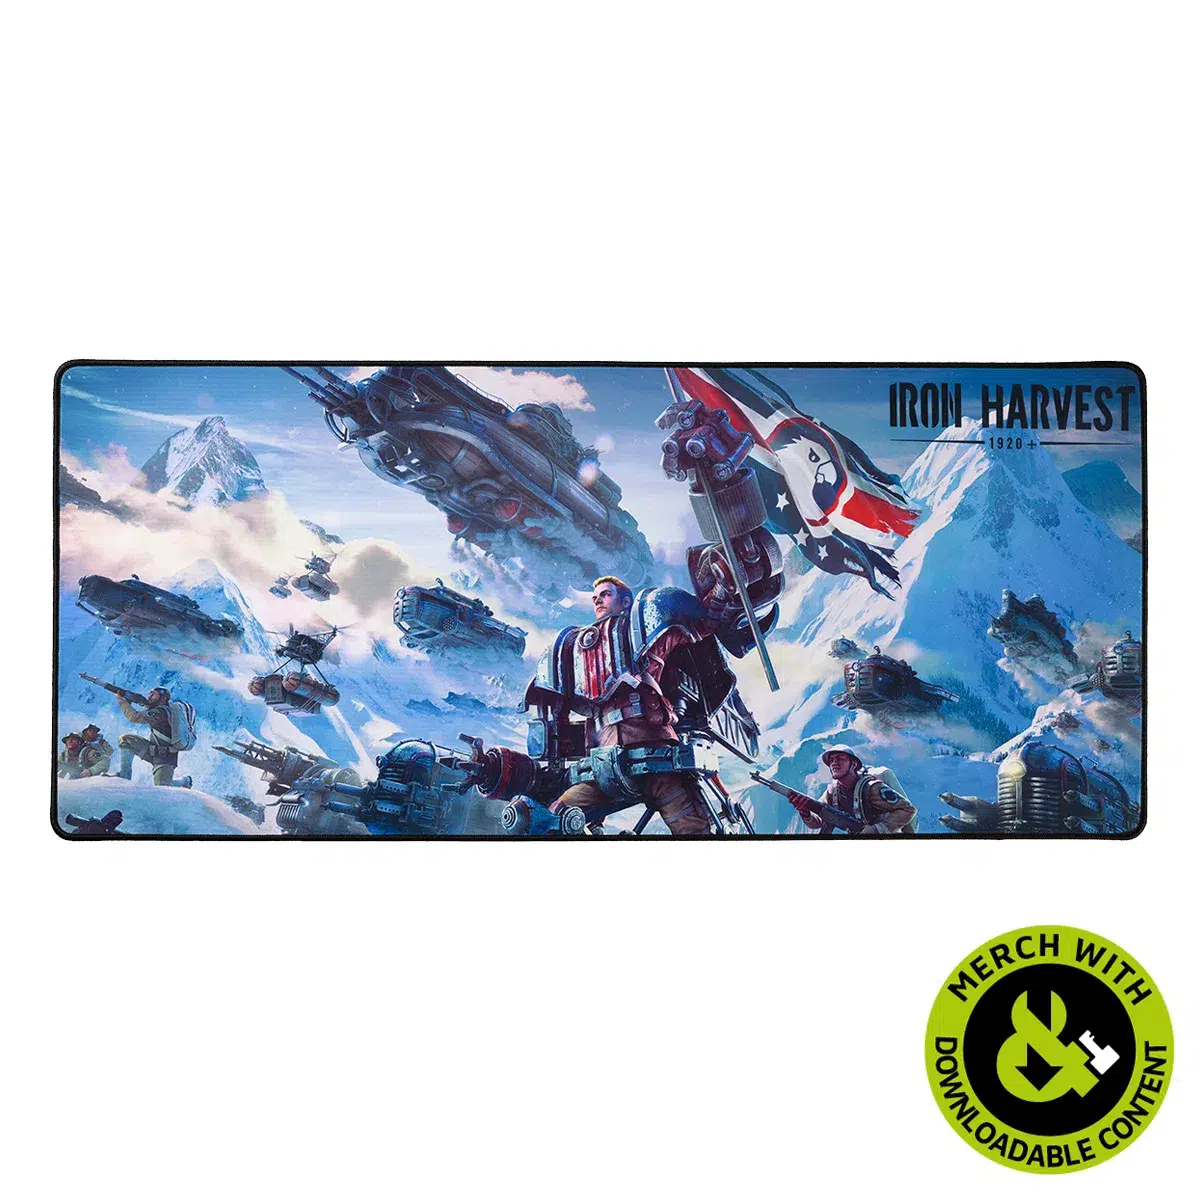 Iron Harvest Mousepad "Operation Eagle" m2 Cover